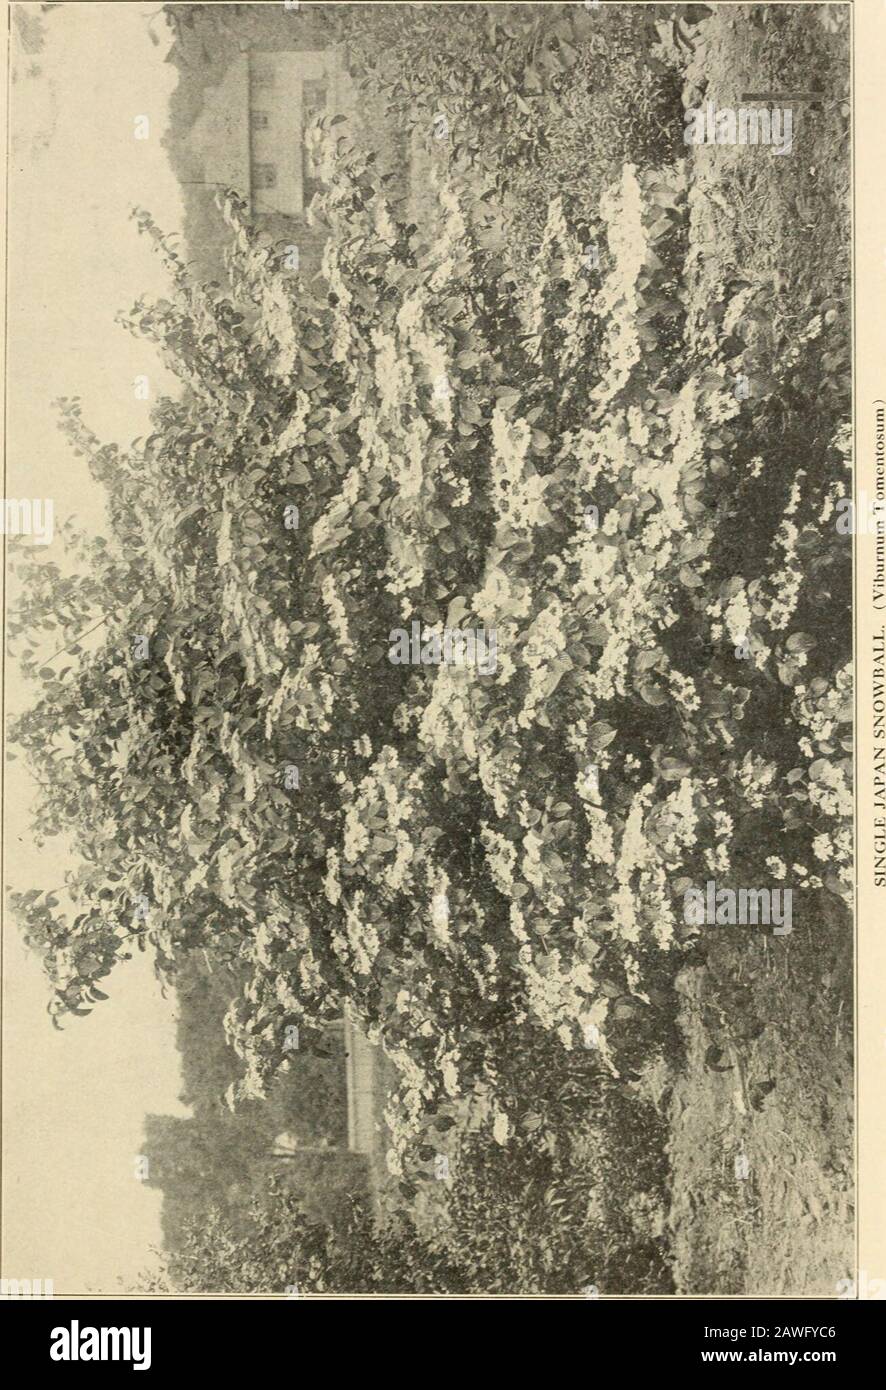 Mount Hope Nurseries established 1840 : general catalogue . lla, rosea var. Sieboldii alba marginaLa. Cissus variegata. Euonymus, radicans variegata. Cornus {Dogv:ood), alba var. elegantissima Hibiscus (^/^/&lt;«,^a), Syriacus var. fl. pi. fol. varie-variegata. gata. Mas. variegata. Kerria(CorrAo/vfs), Japonicaargentea variegata. Siberica foliis albo marginatis. Philadelphus (Si/riiu/a), foliis aureis. Spaethii. Prunus (Plum), Pissardi. Corylus {Filbert), atropurpurea. Ptelea (Hop Tree), trifoliata var. aurea. aurea. Sambucus {Elder), Canadensis var. aurea. Diervilla {Weigela), rosea var. nana Stock Photo